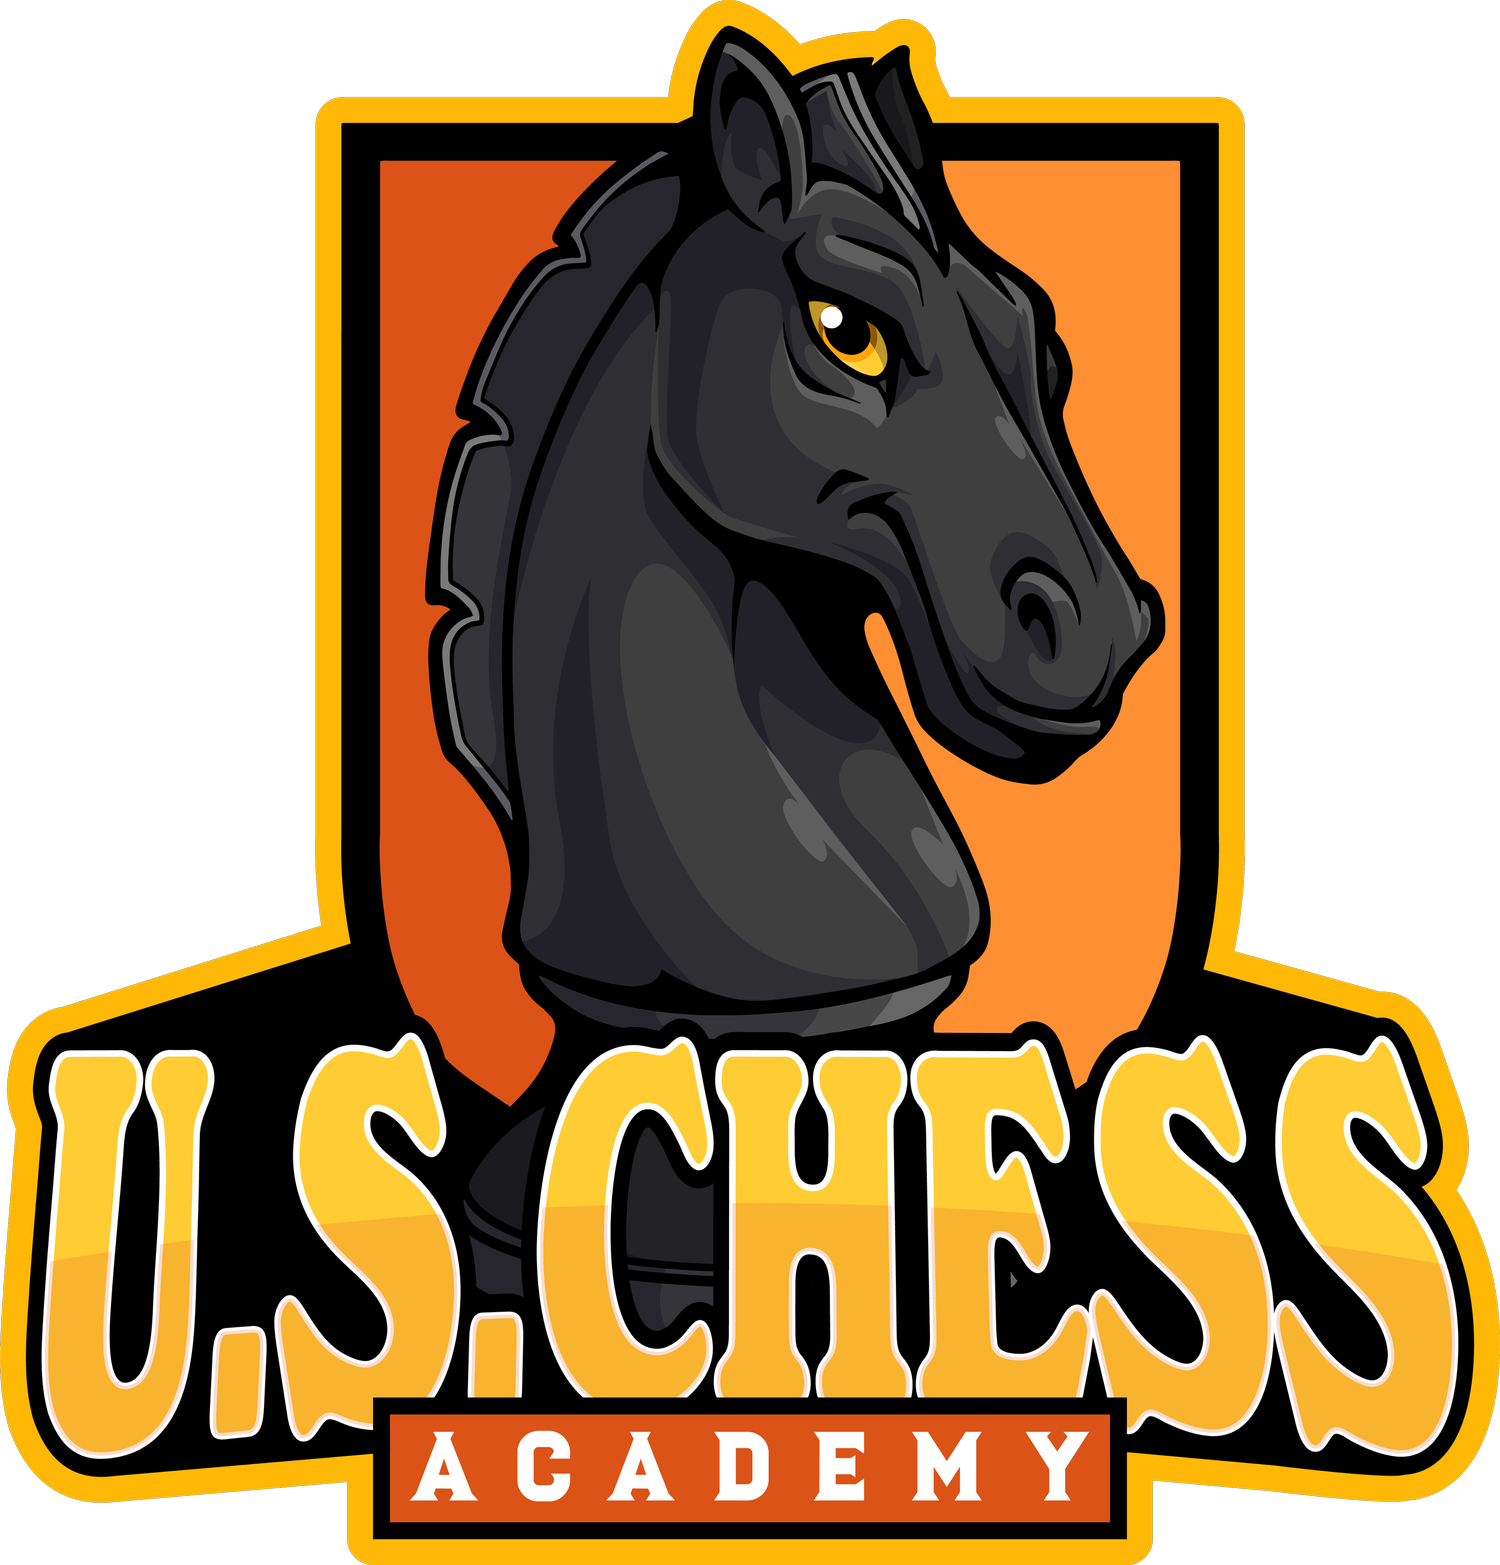 US Chess Academy